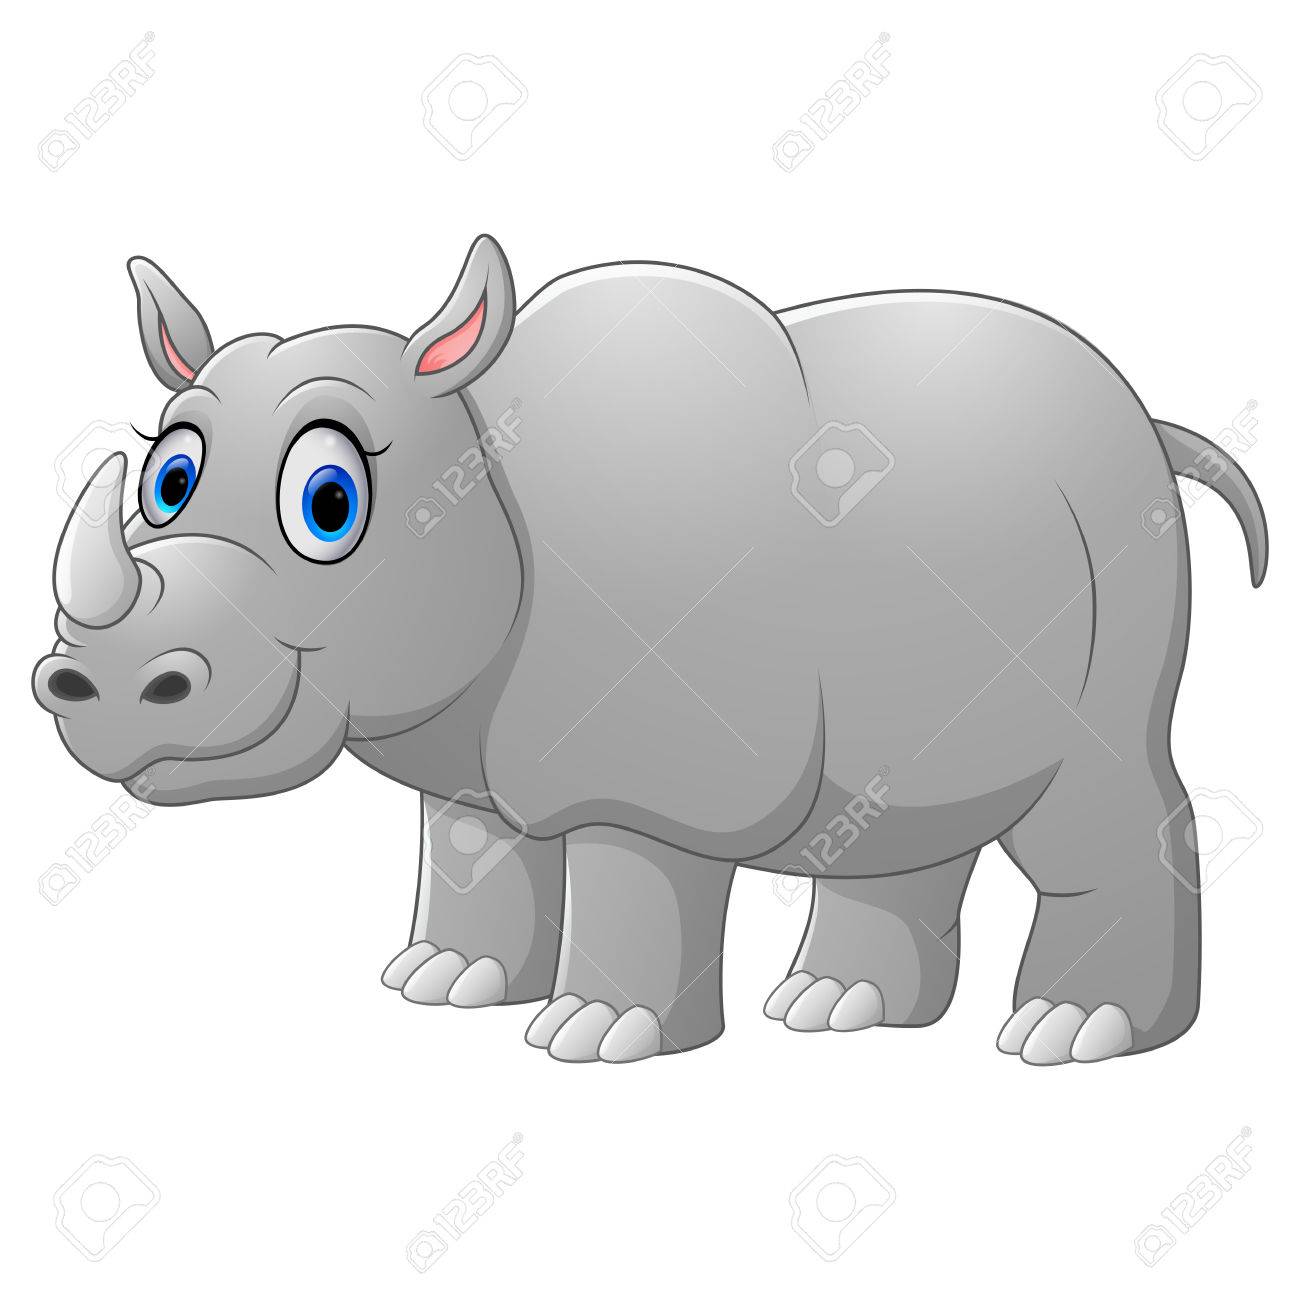 Cartoon rhino.